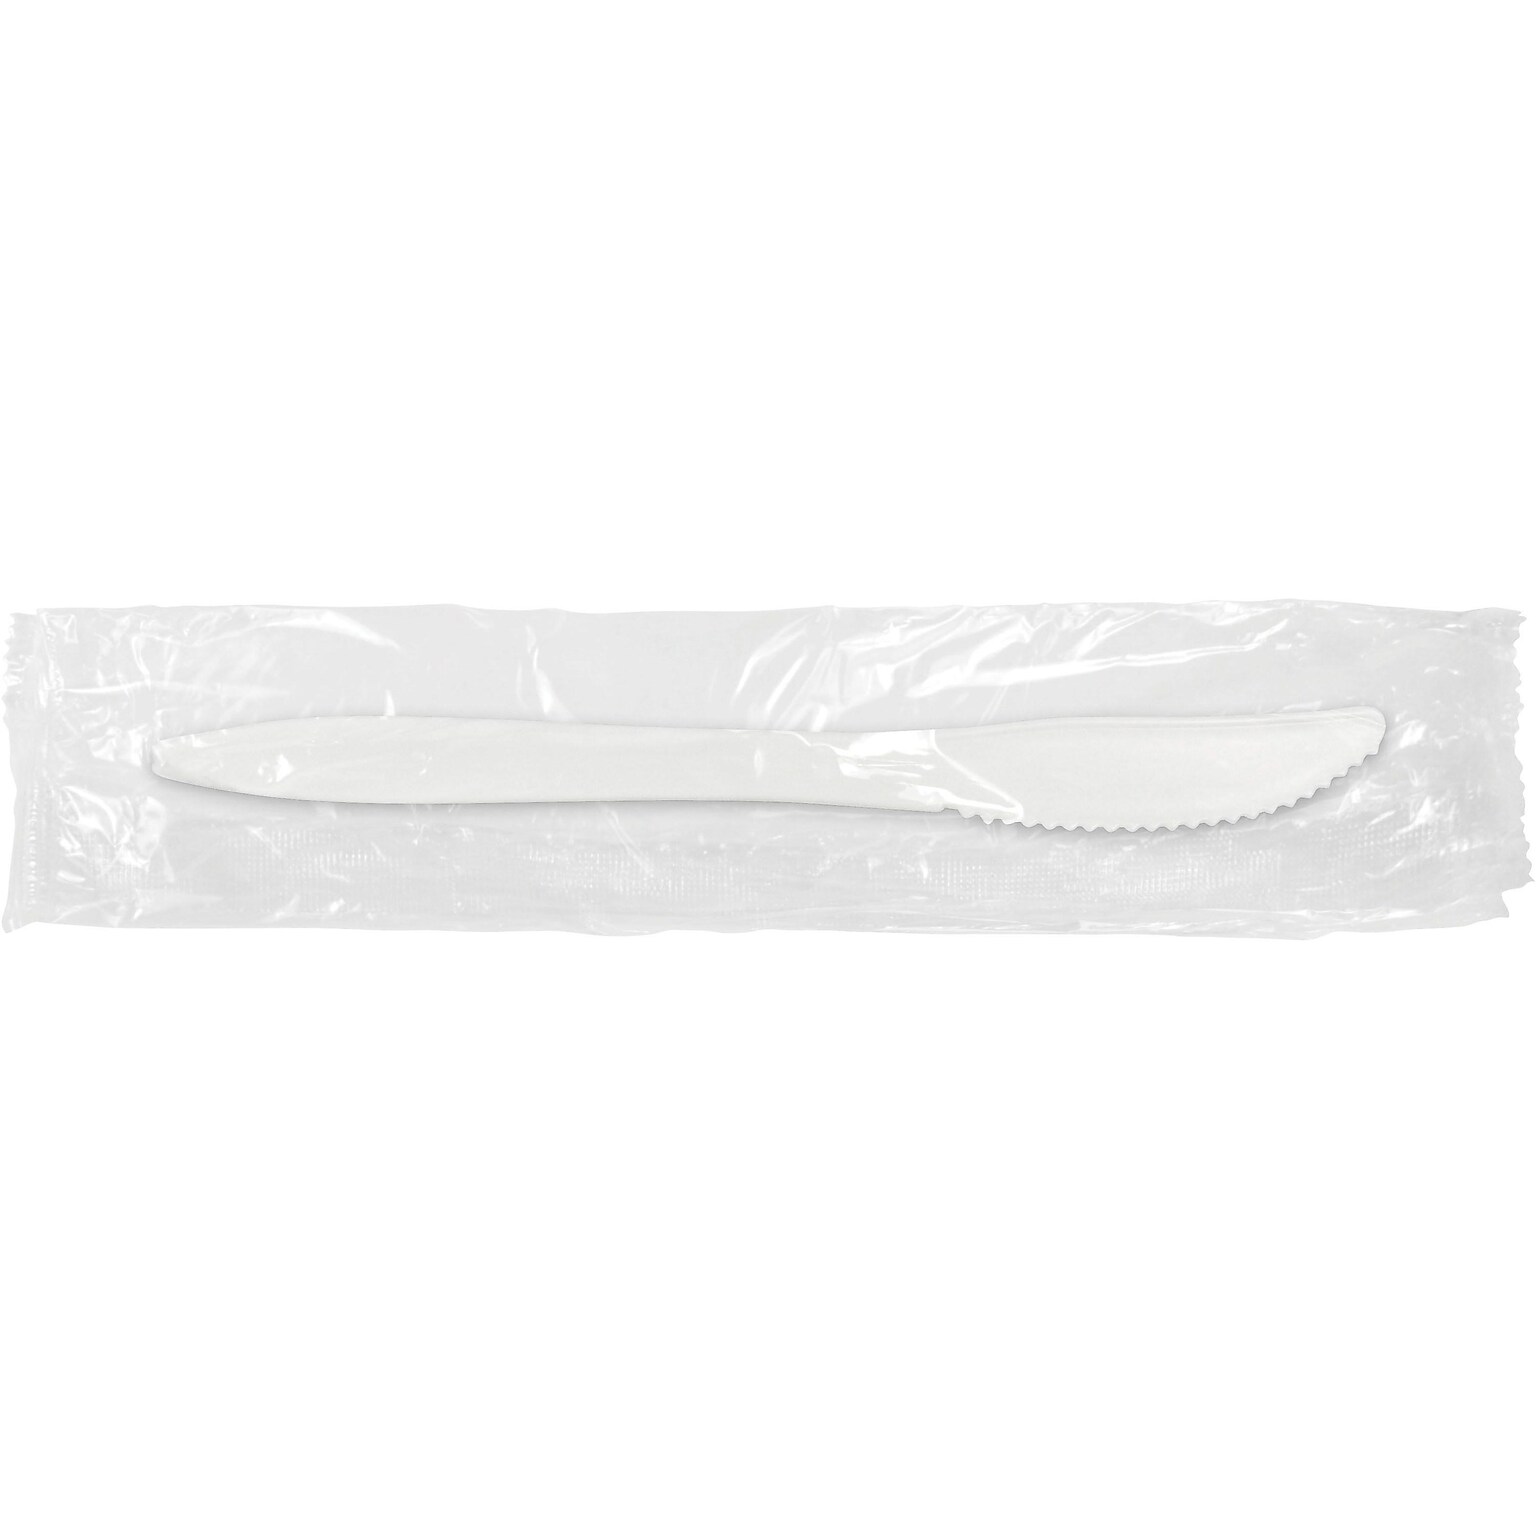 Berkley Square Individually Wrapped Polypropylene Knives, Medium-Weight, White, 1000/Carton (1101000)